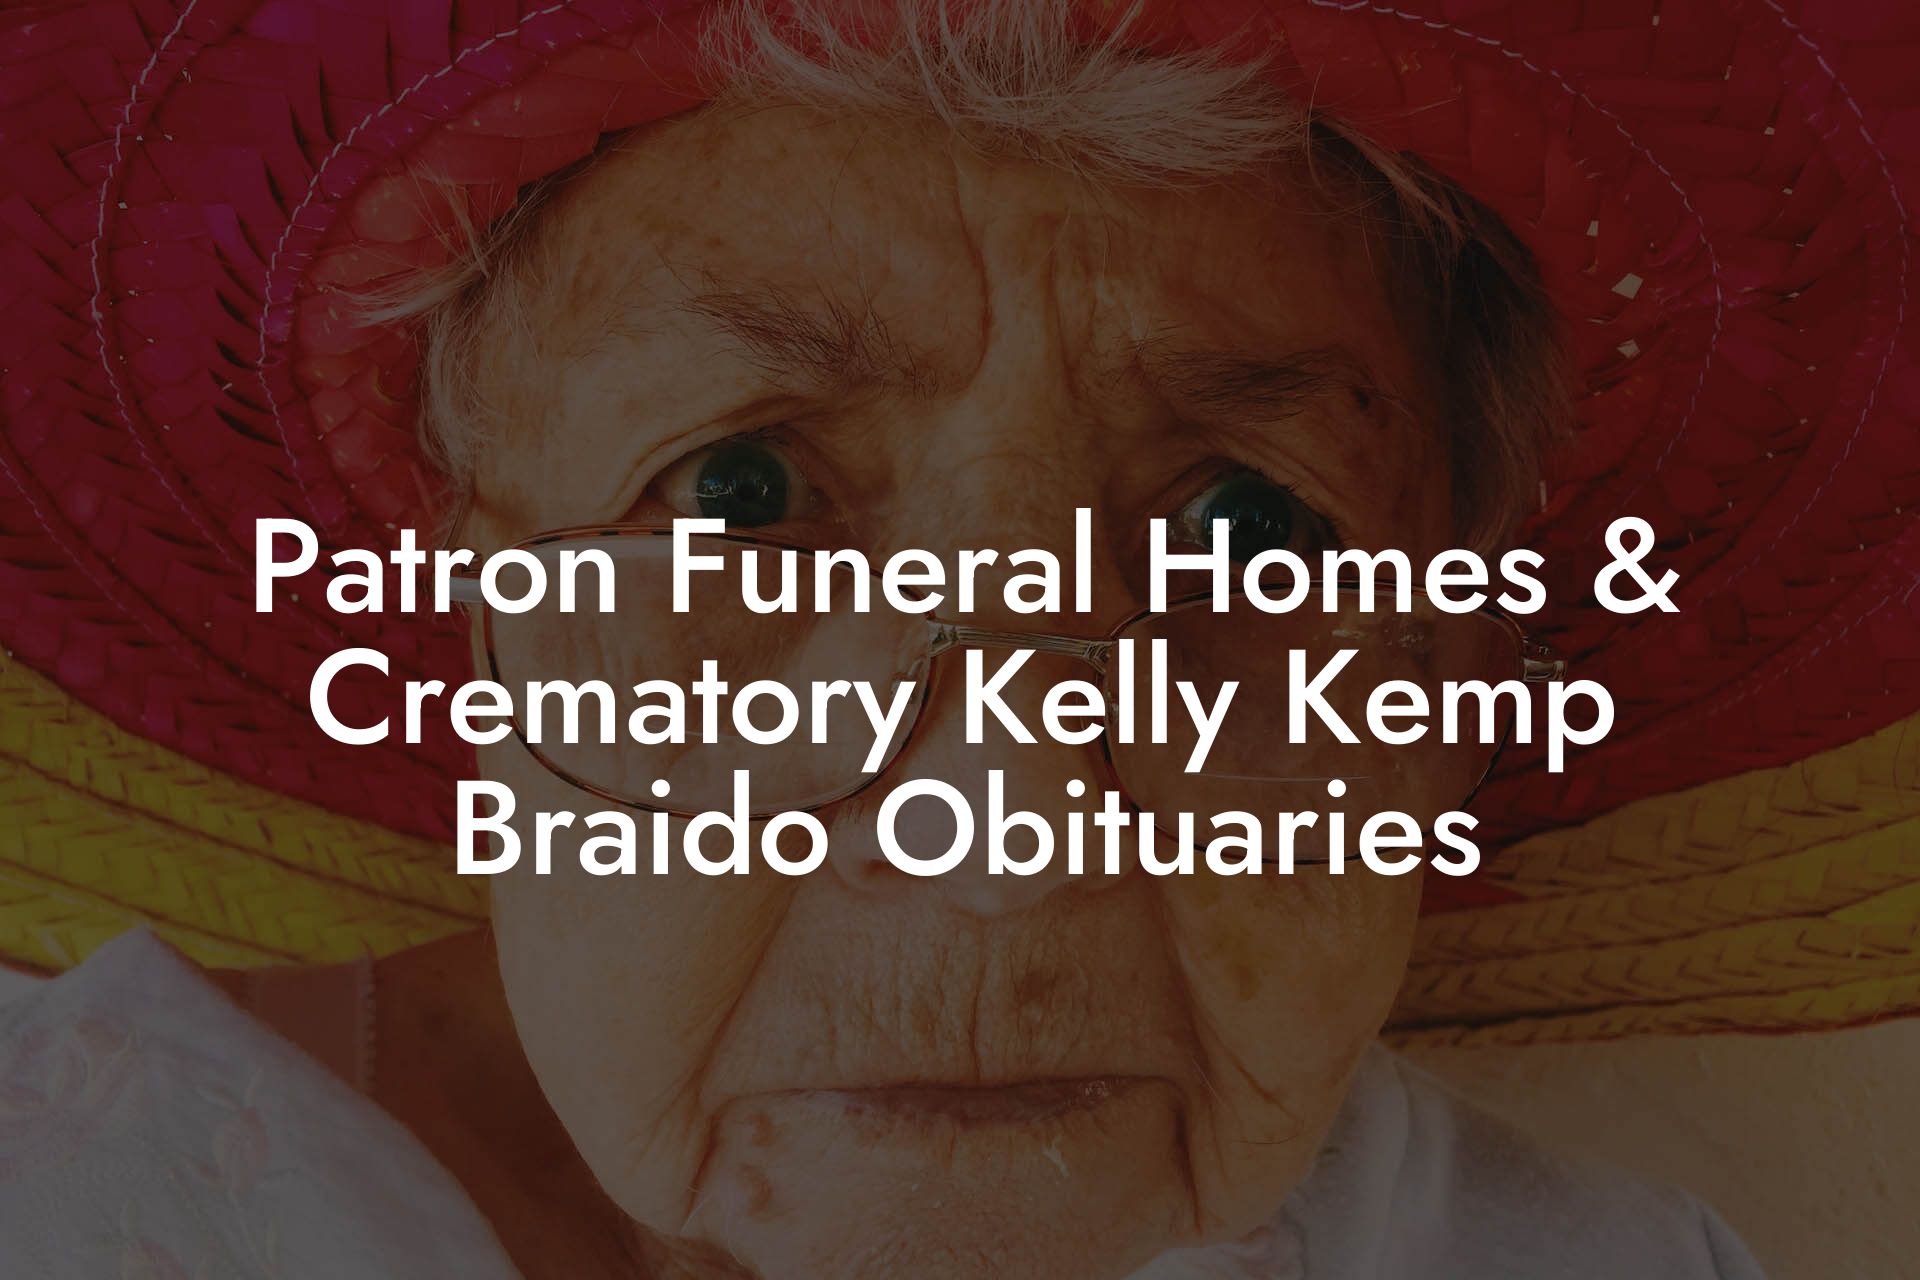 Patron Funeral Homes & Crematory Kelly Kemp Braido Obituaries